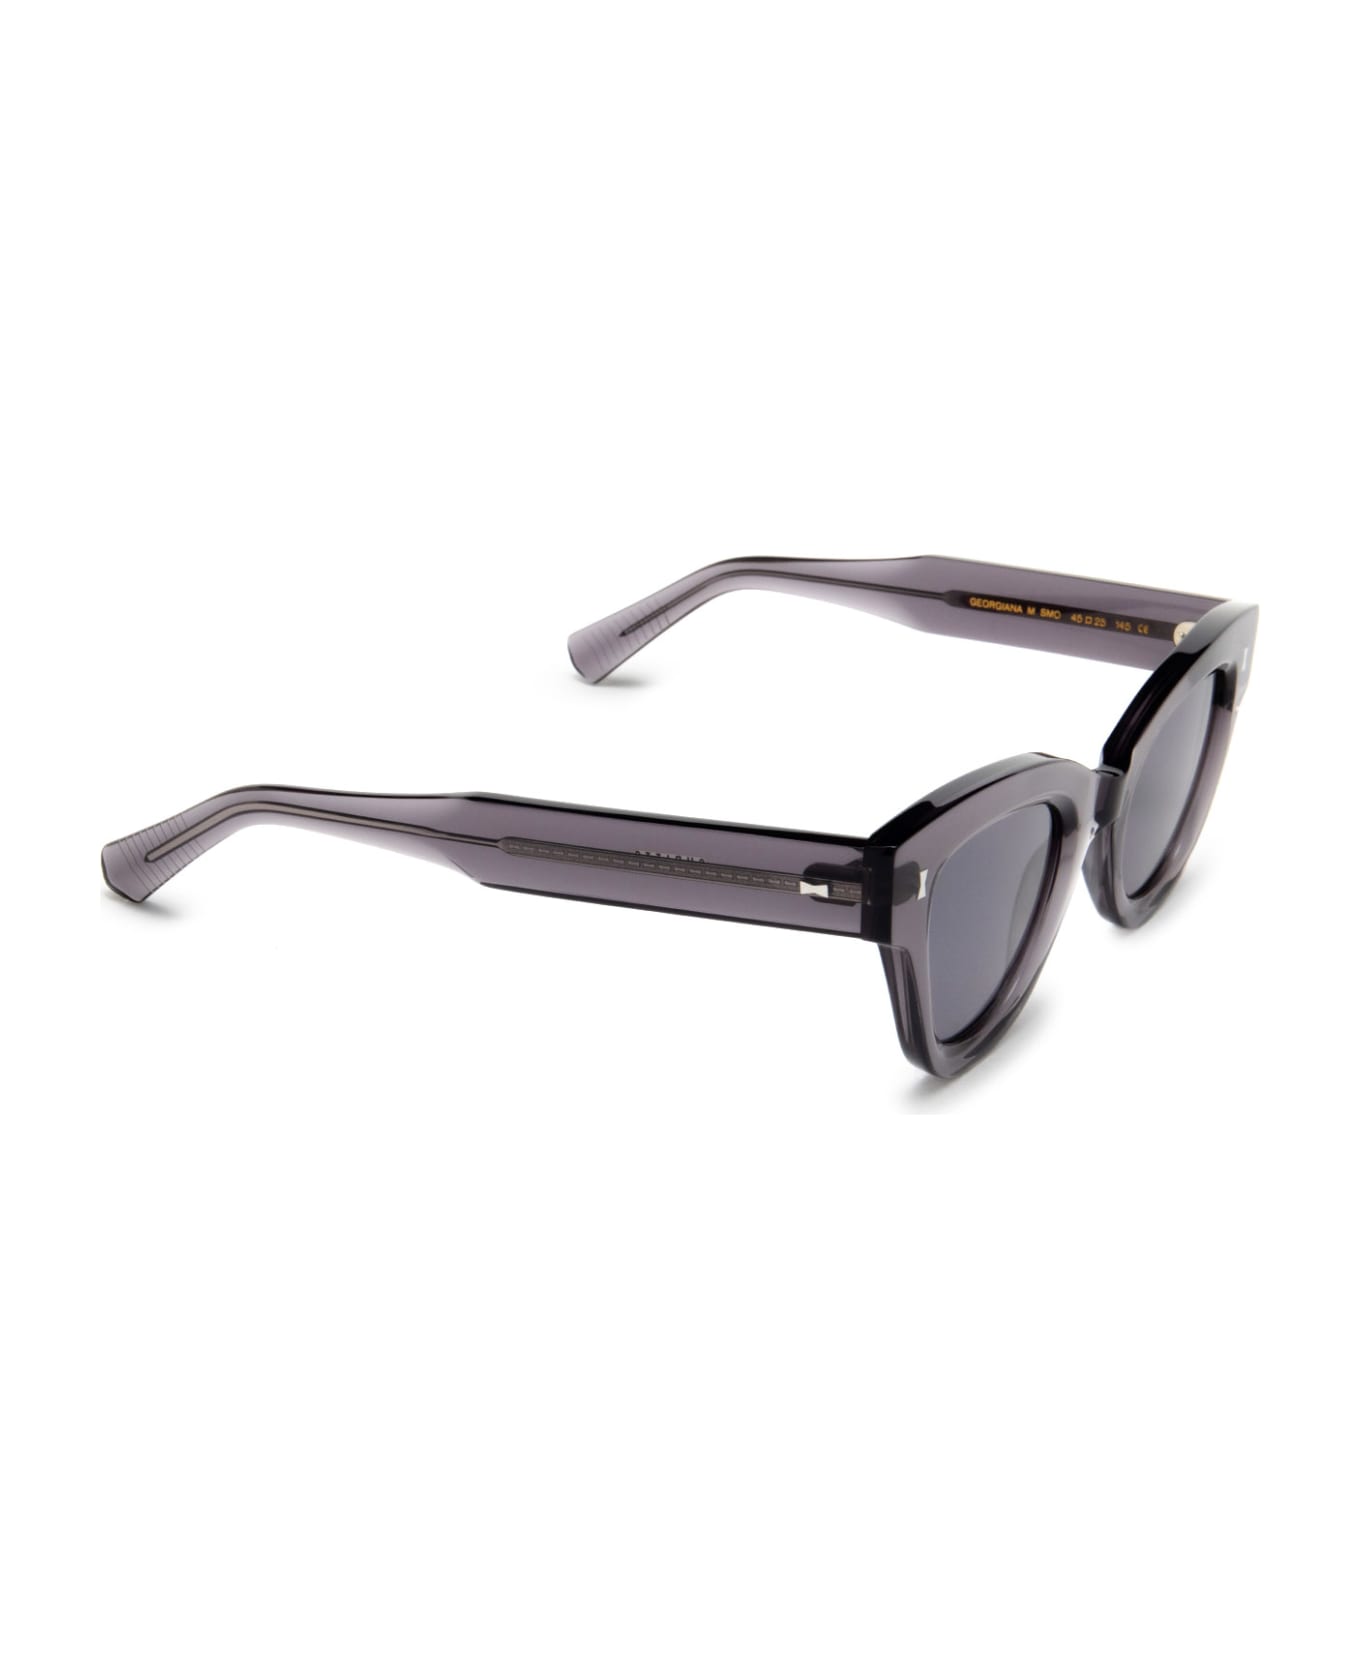 Cubitts Georgiana Sun Smoke Grey Sunglasses - Smoke Grey サングラス